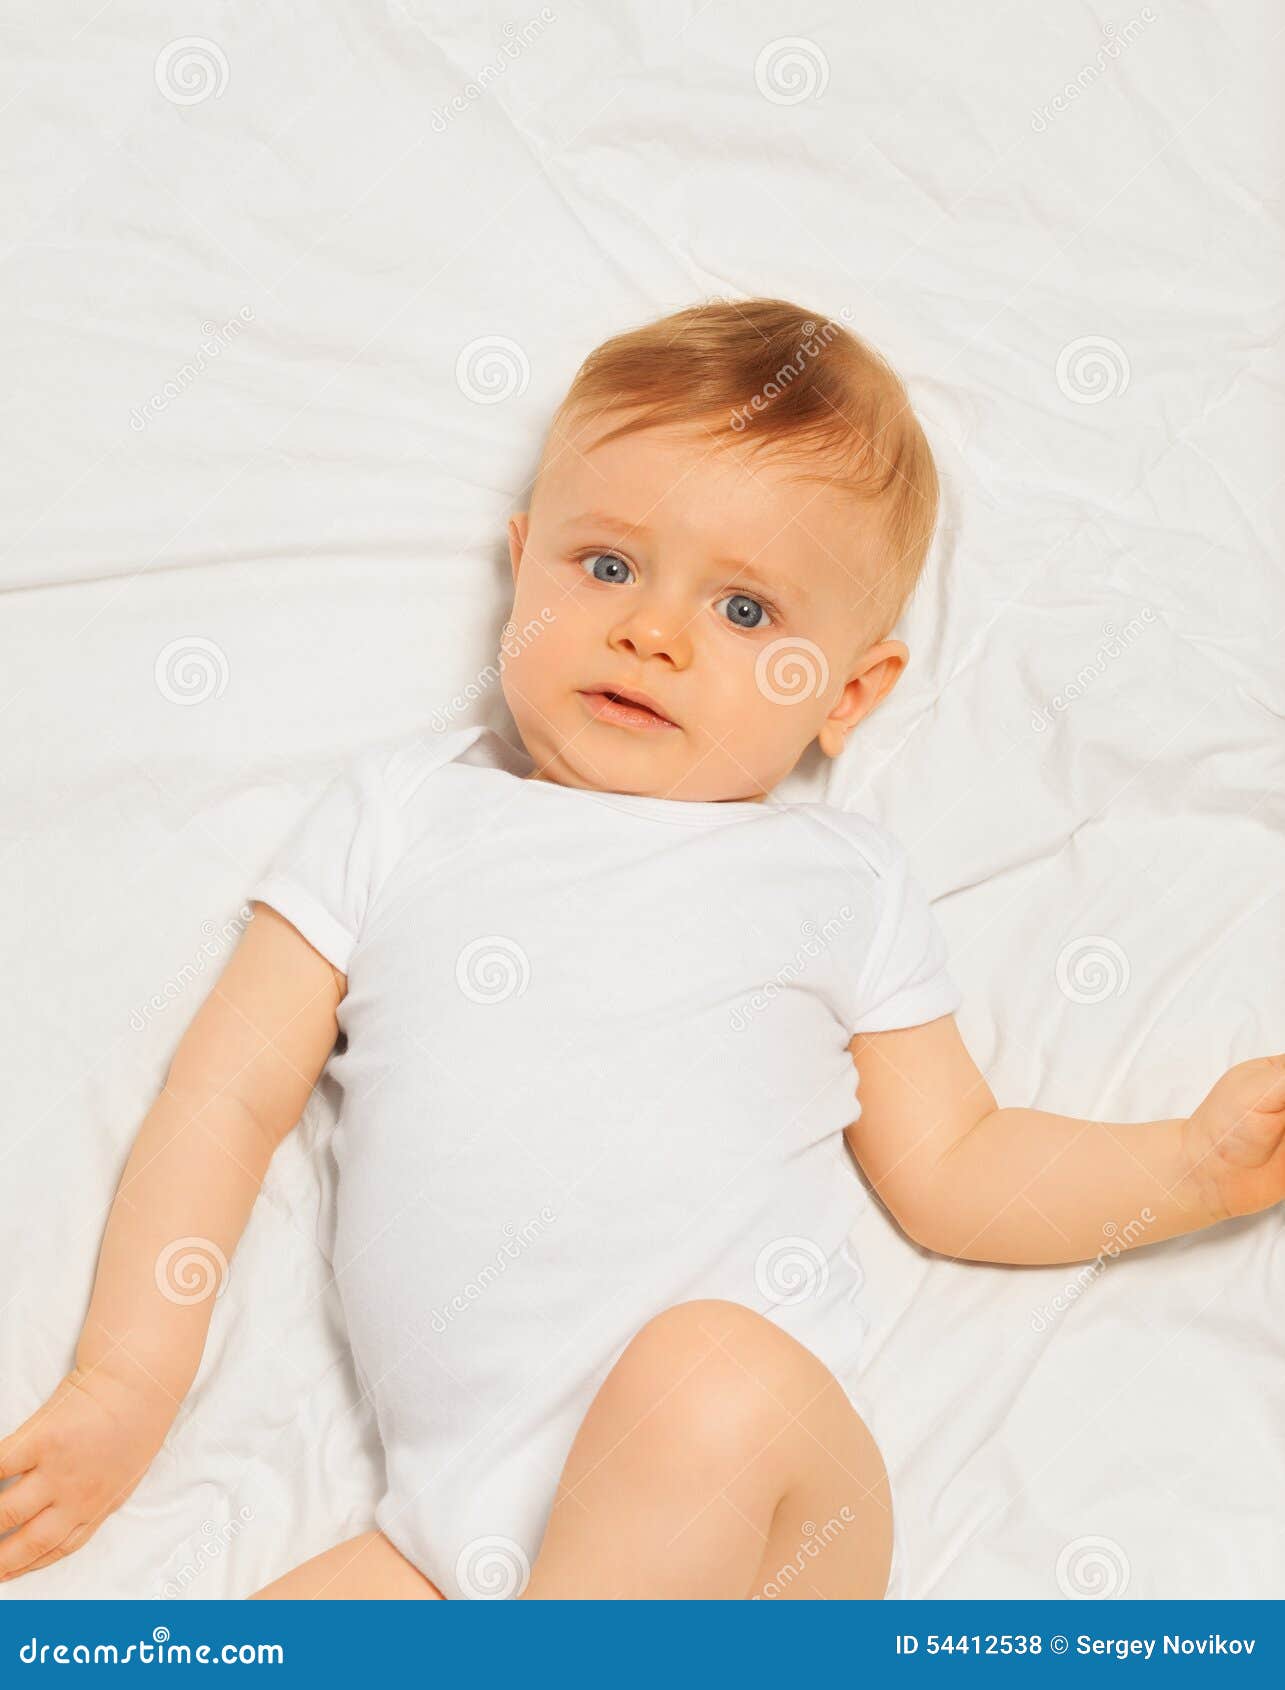 Chubby Sad Small Baby Wearing White Bodysuit Lay Stock Photo - Image of ...